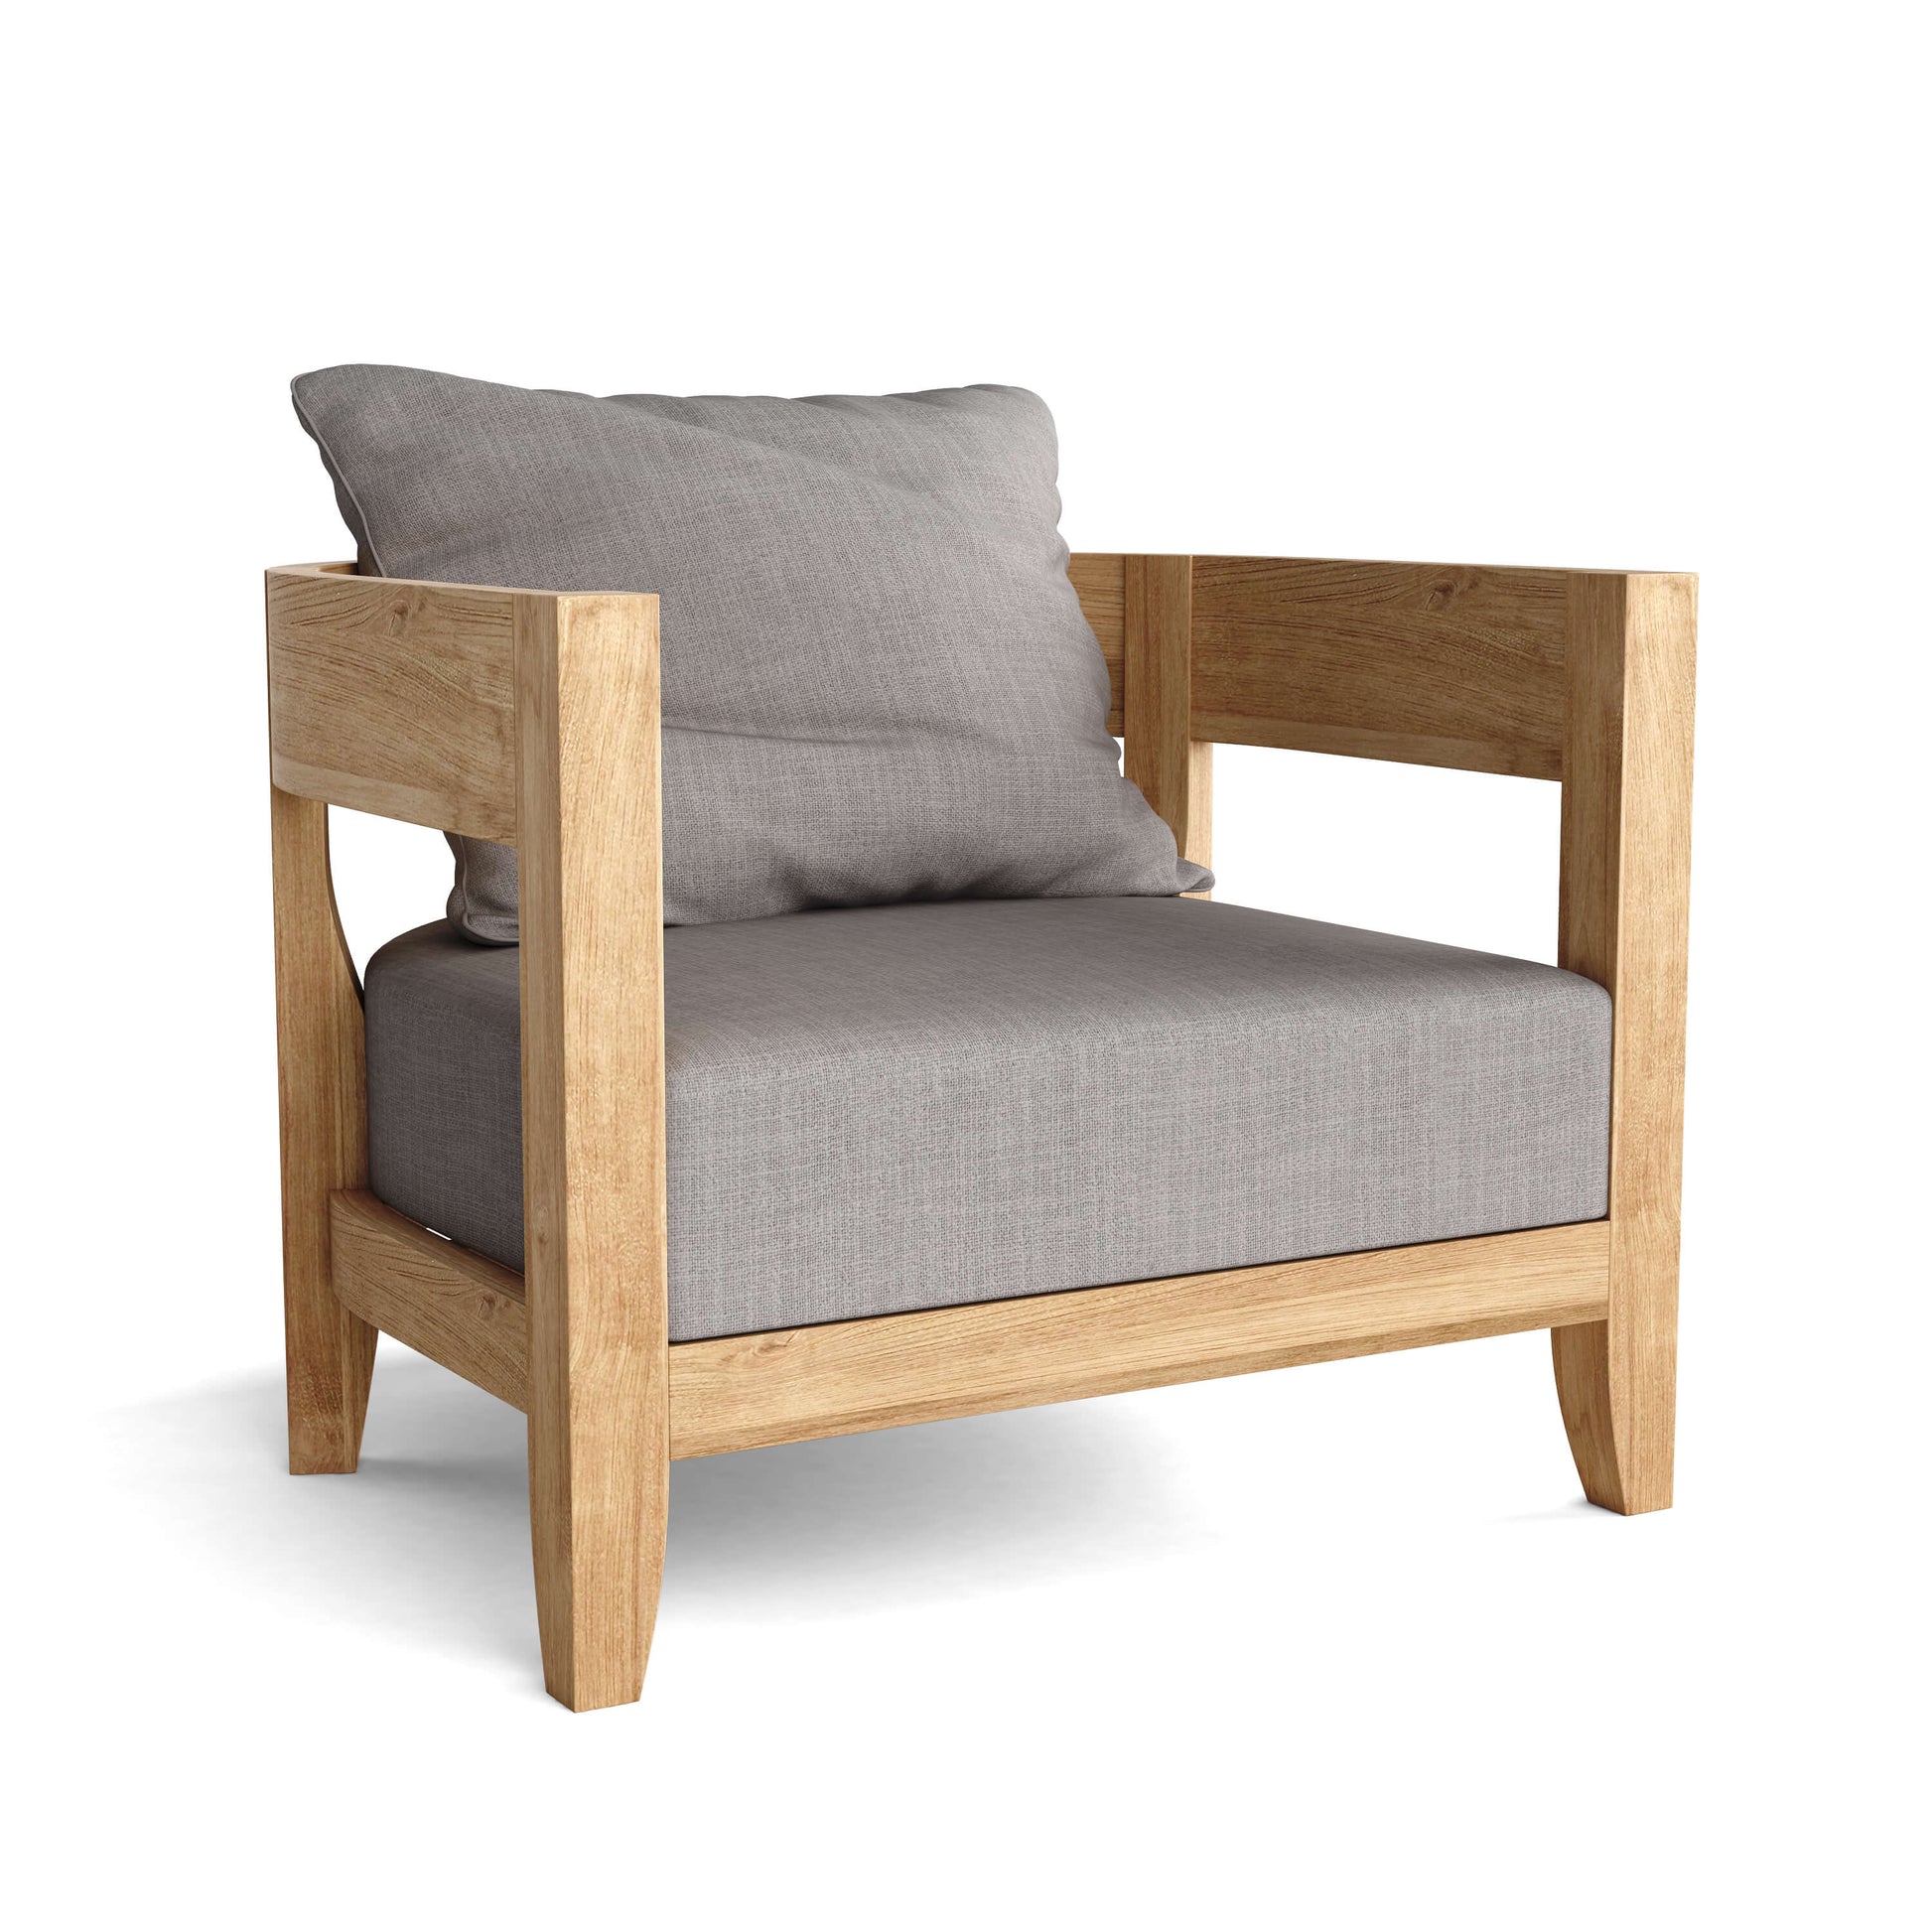 Anderson Teak Coronado SET-172 5-pc Natural Teak Wood Deep Seating Set With Natural All-Weather Sunbrella Cushions